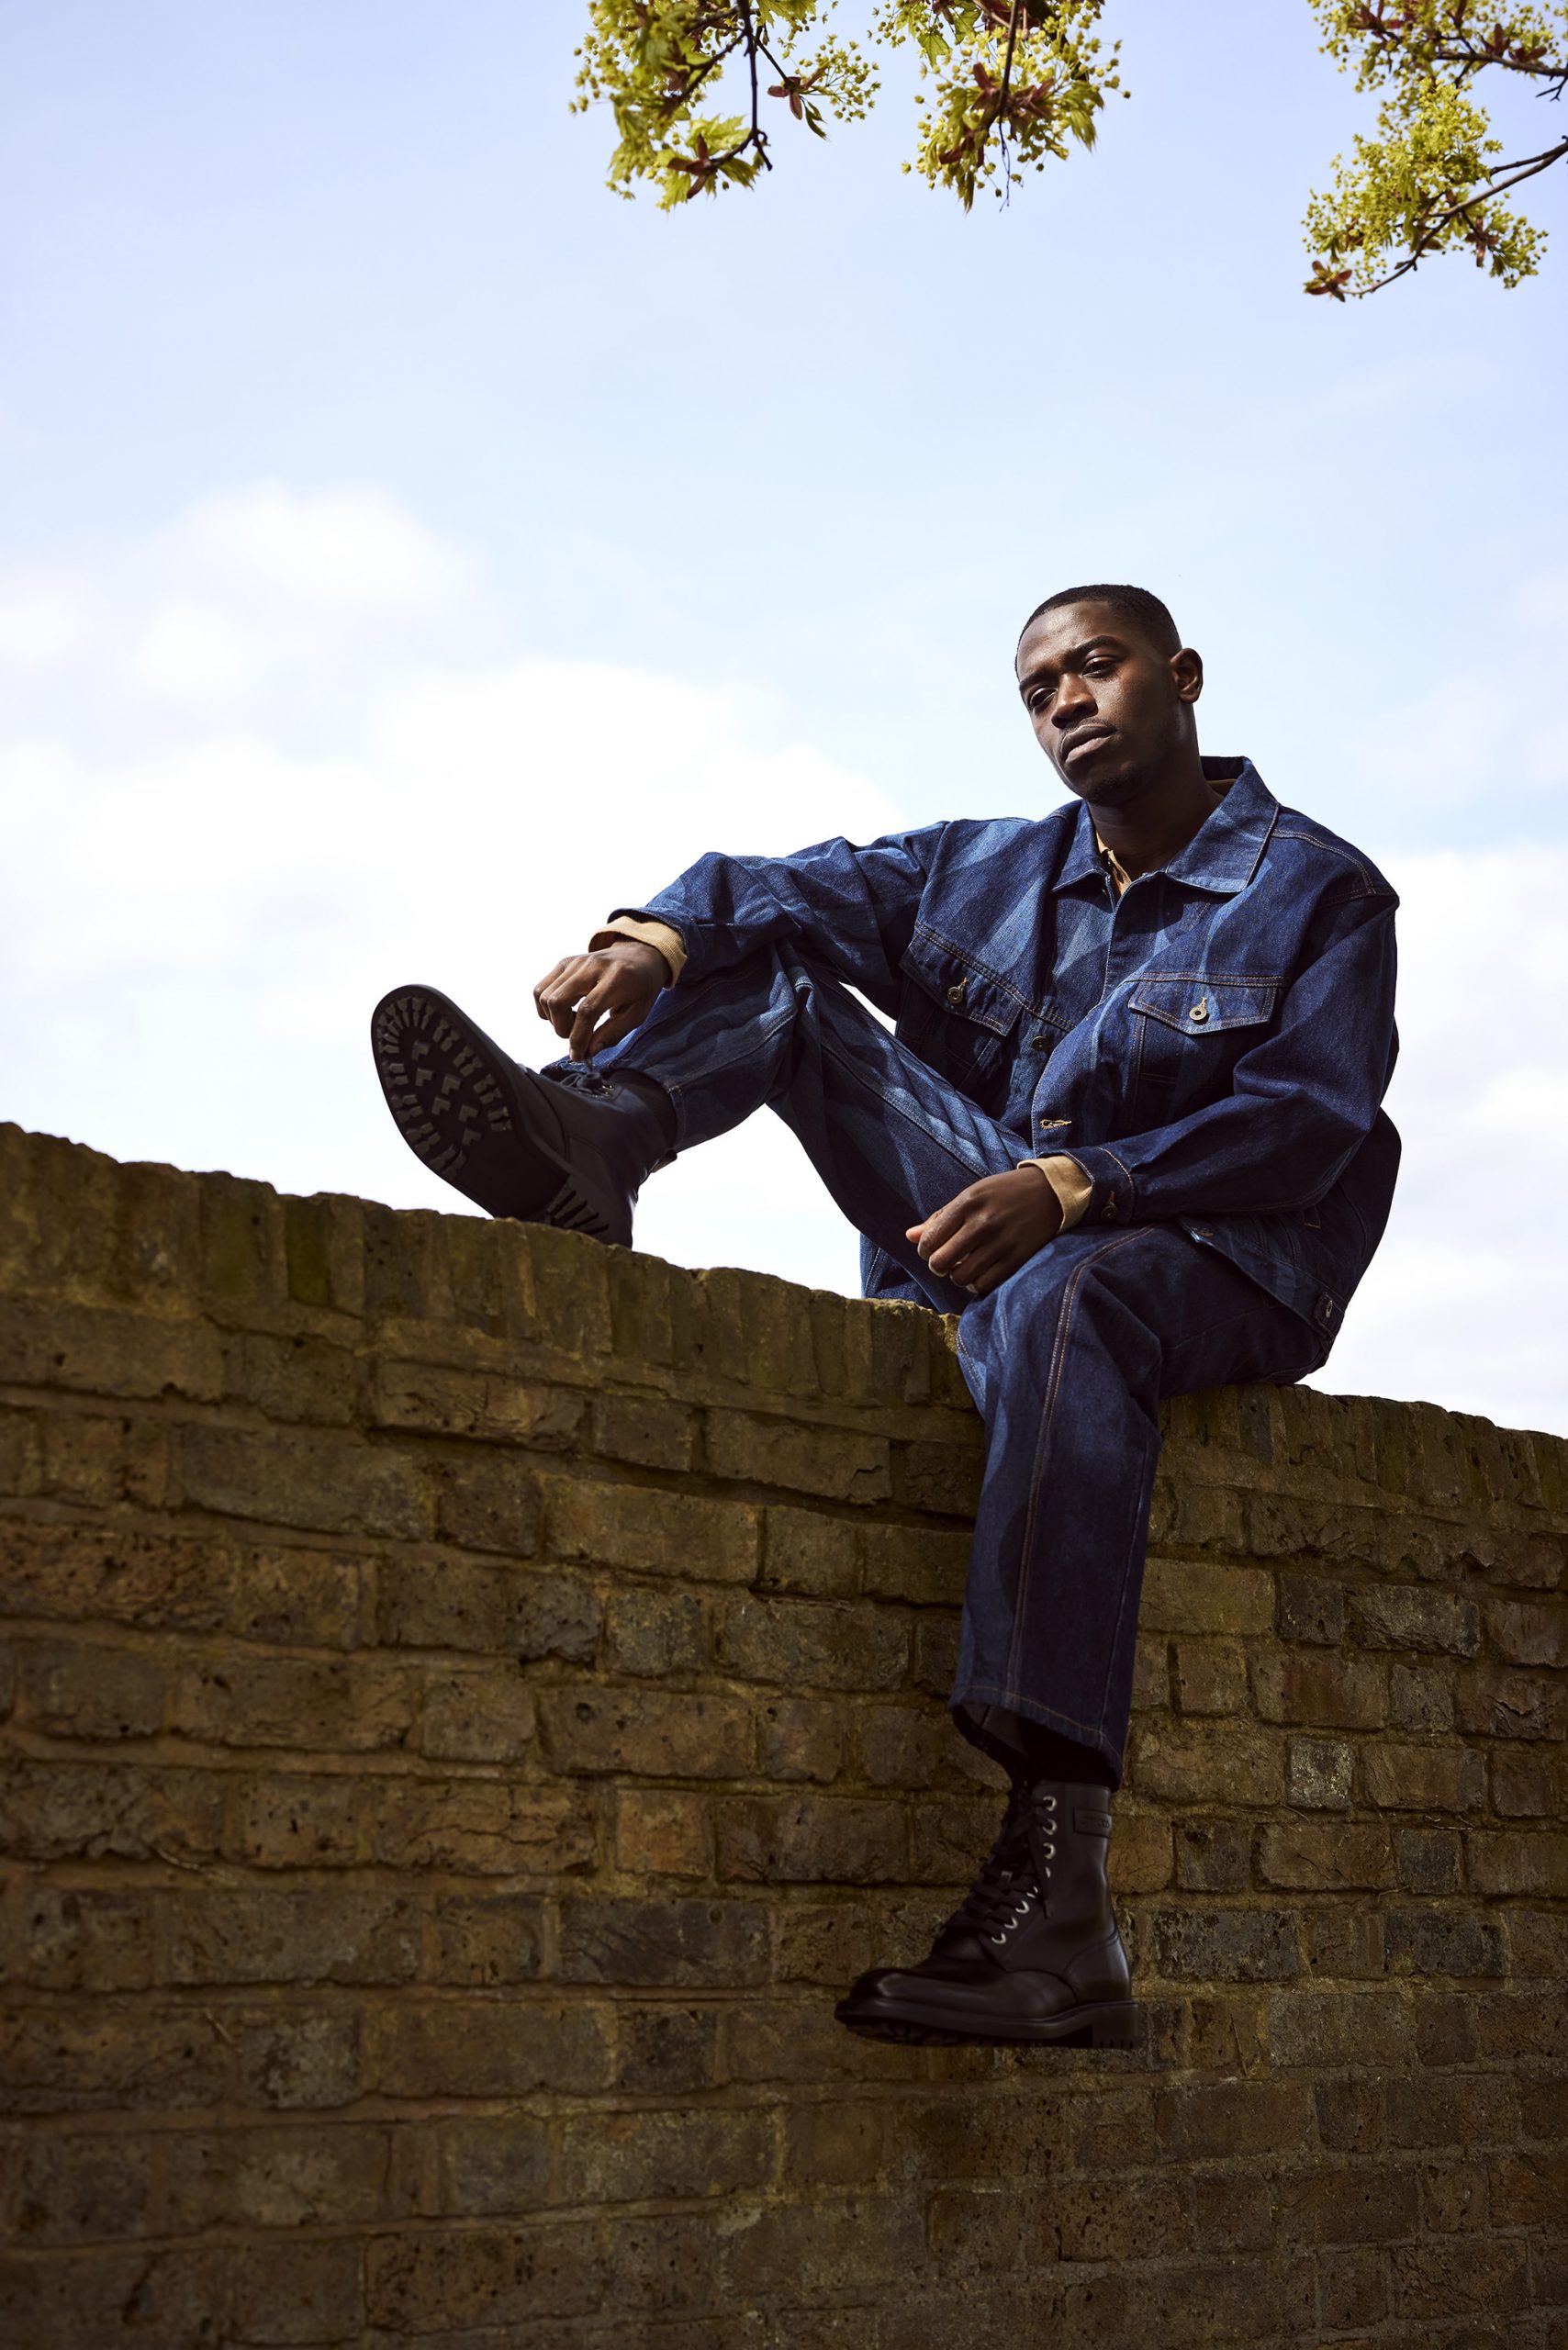 Damson Idris sat on a brick wall wearing a denim jacket and trousers